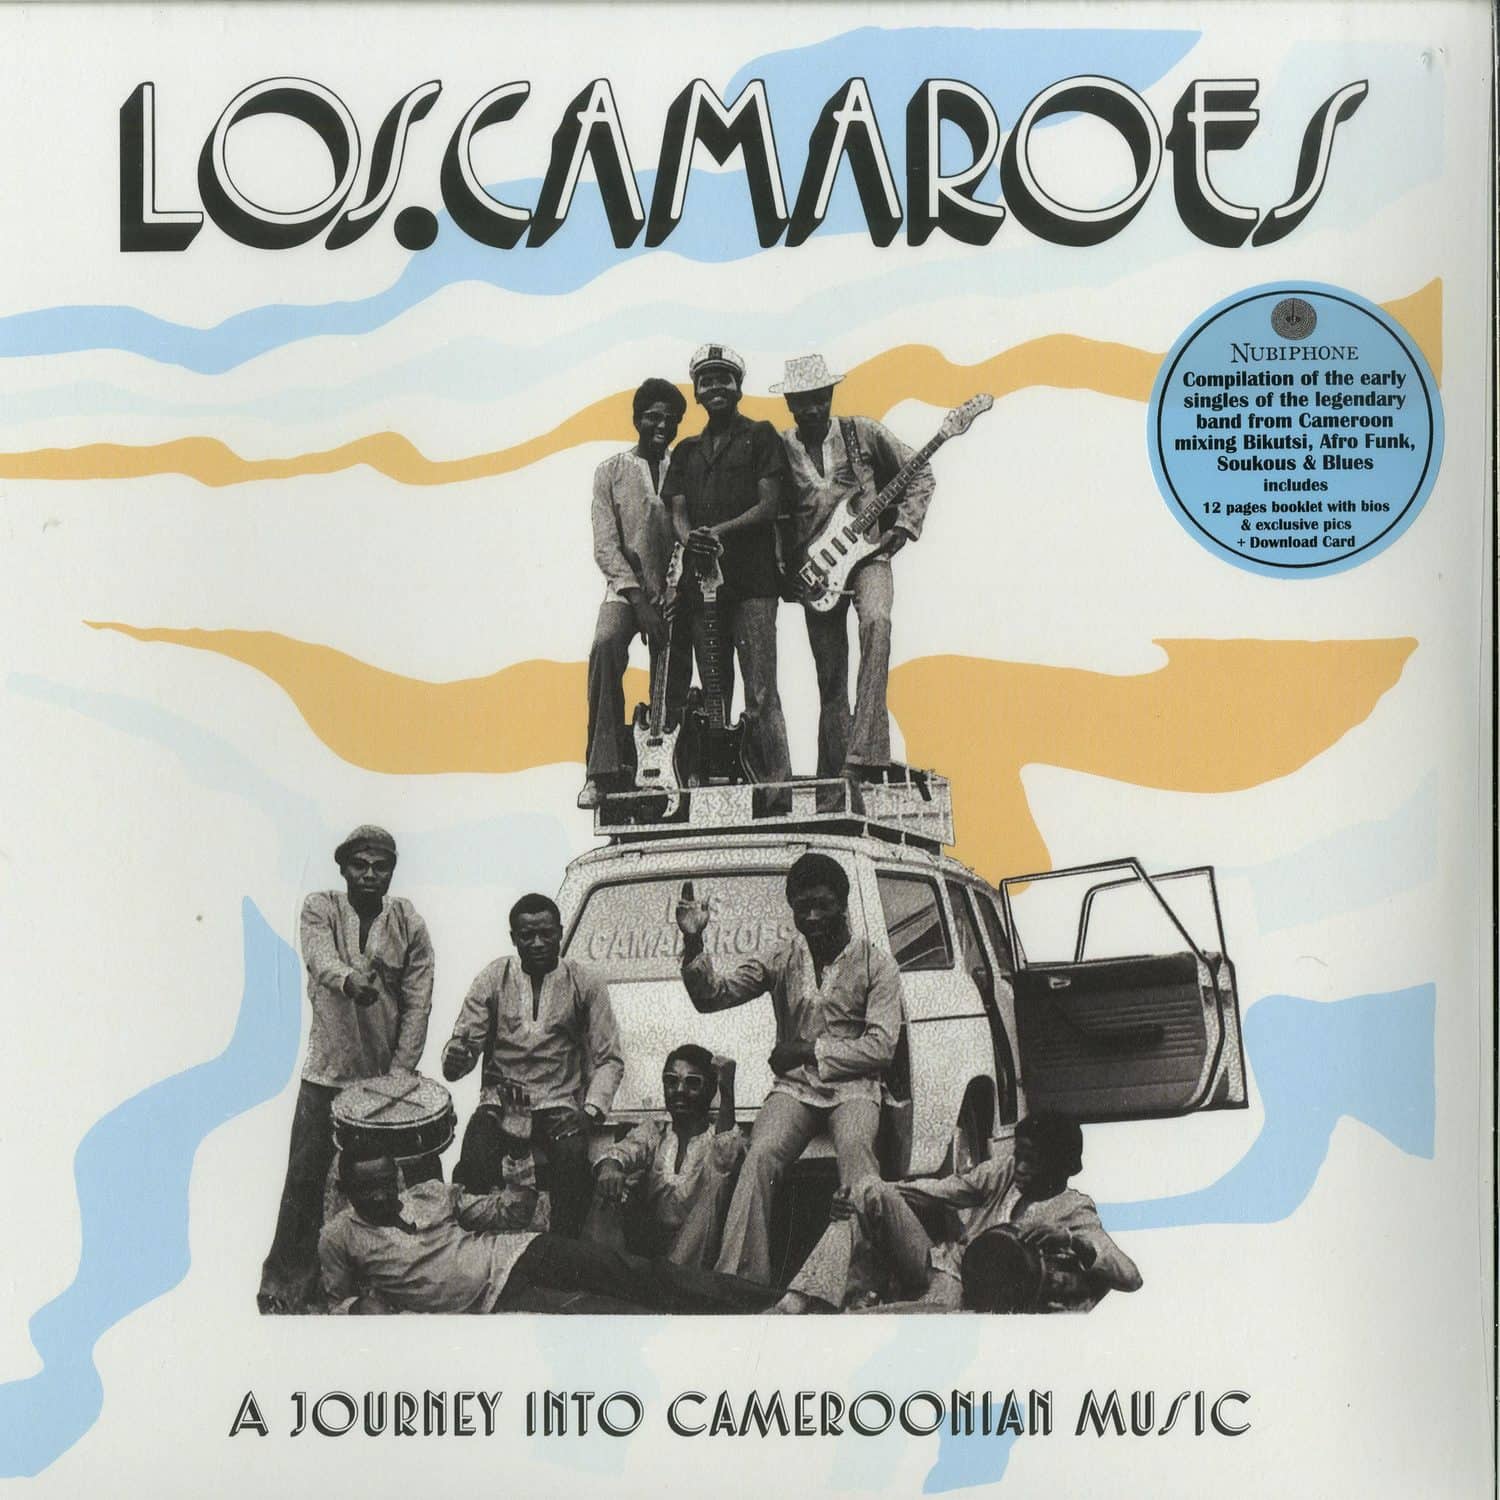 Los Camaroes - A JOURNEY INTO CAMEROONIAN MUSIC 